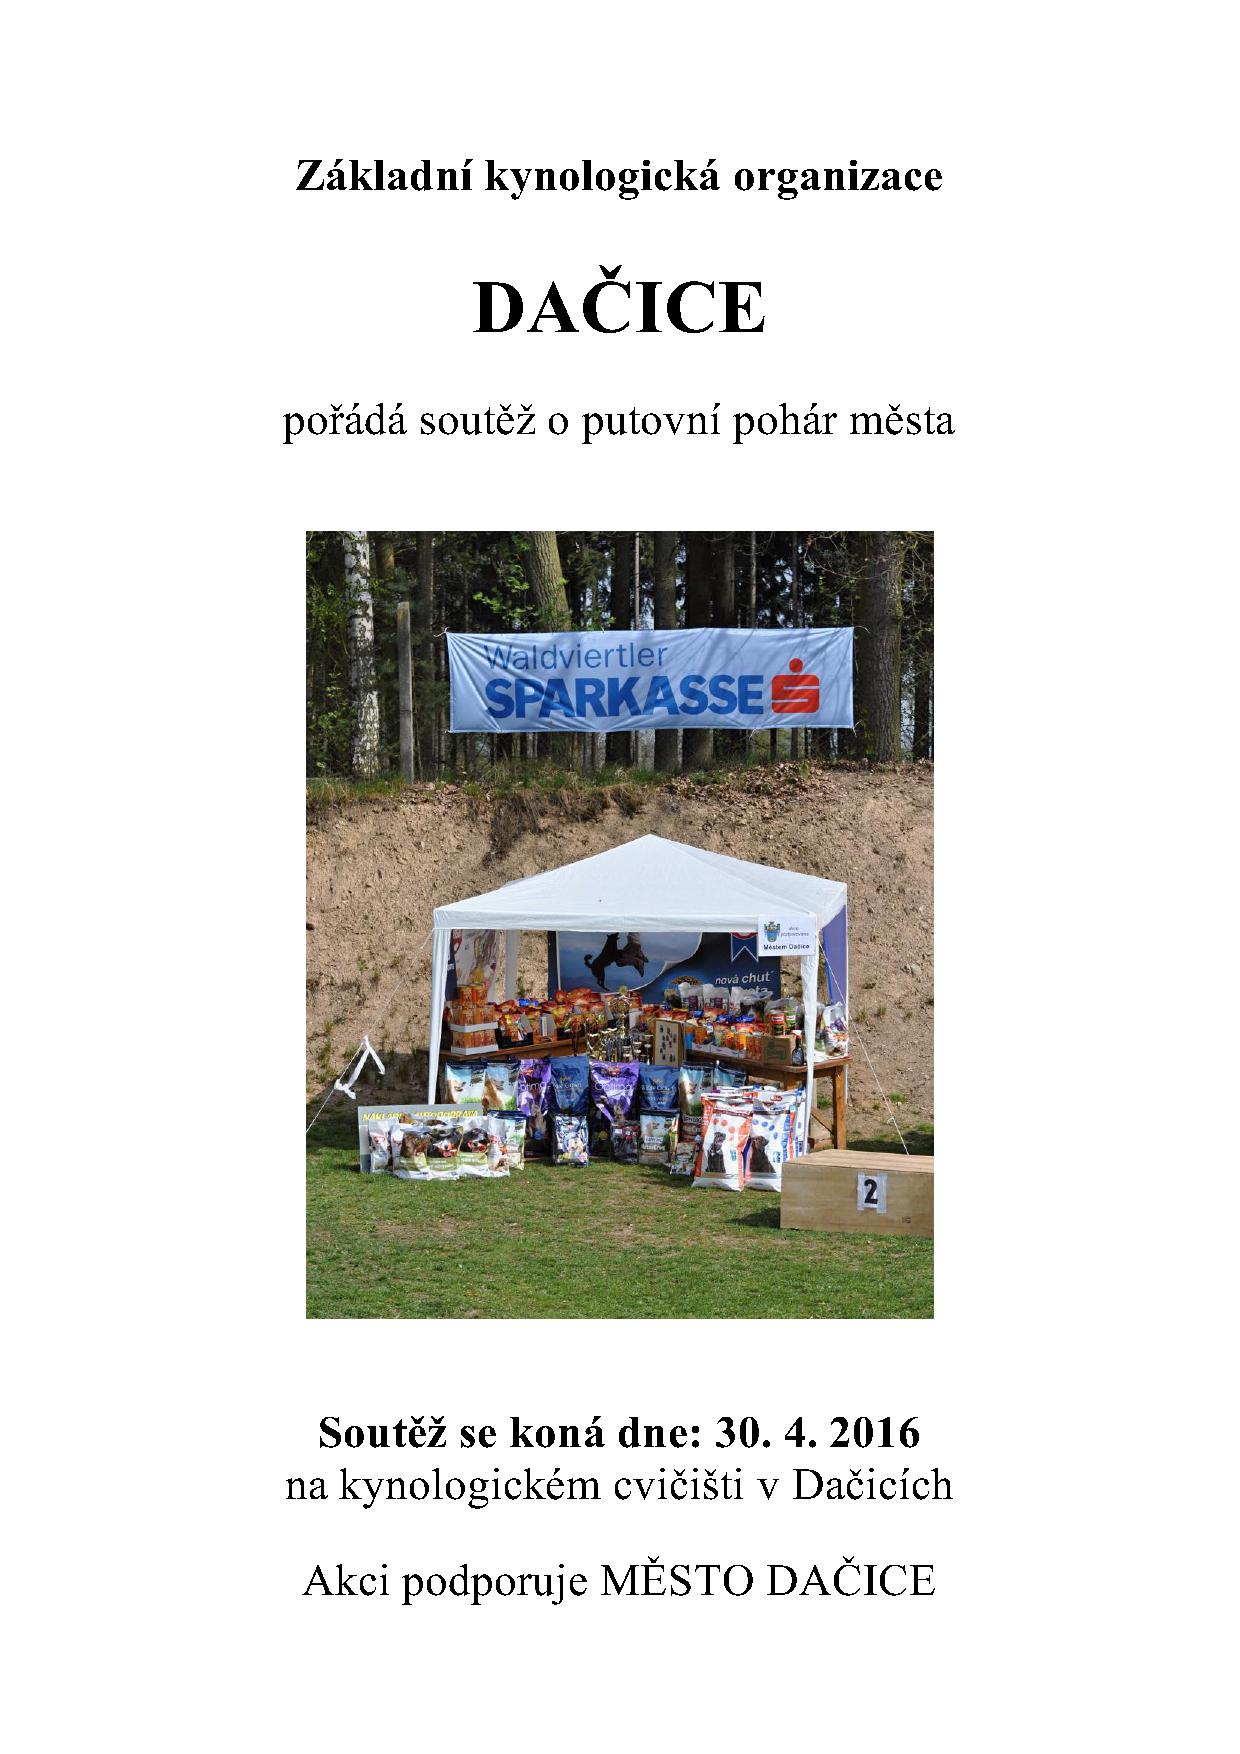 Propozice ZKO Dačice 2016 1